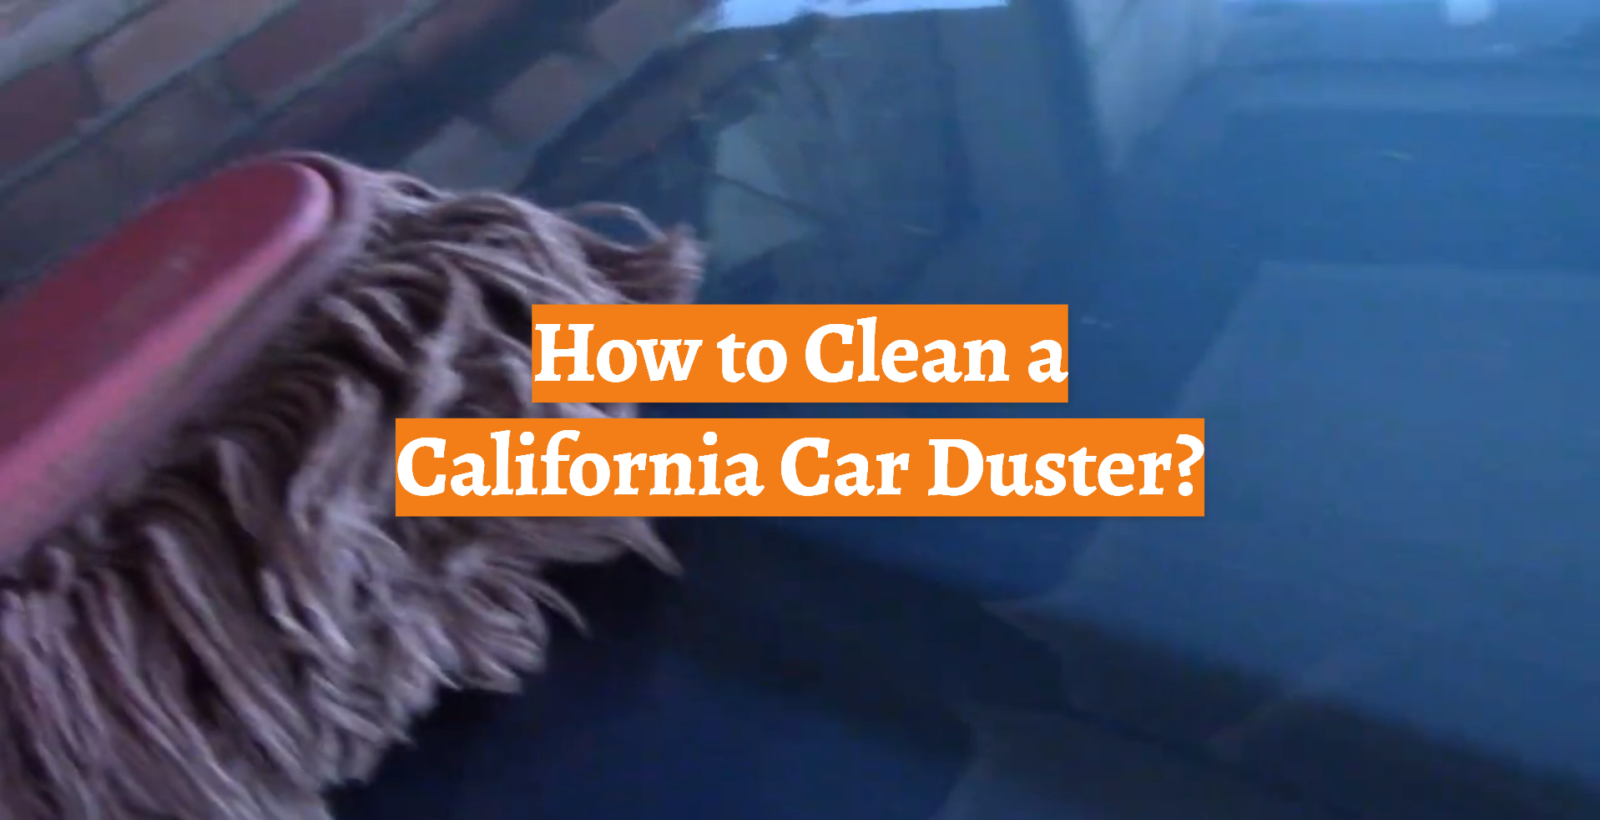 How to Clean a California Car Duster?